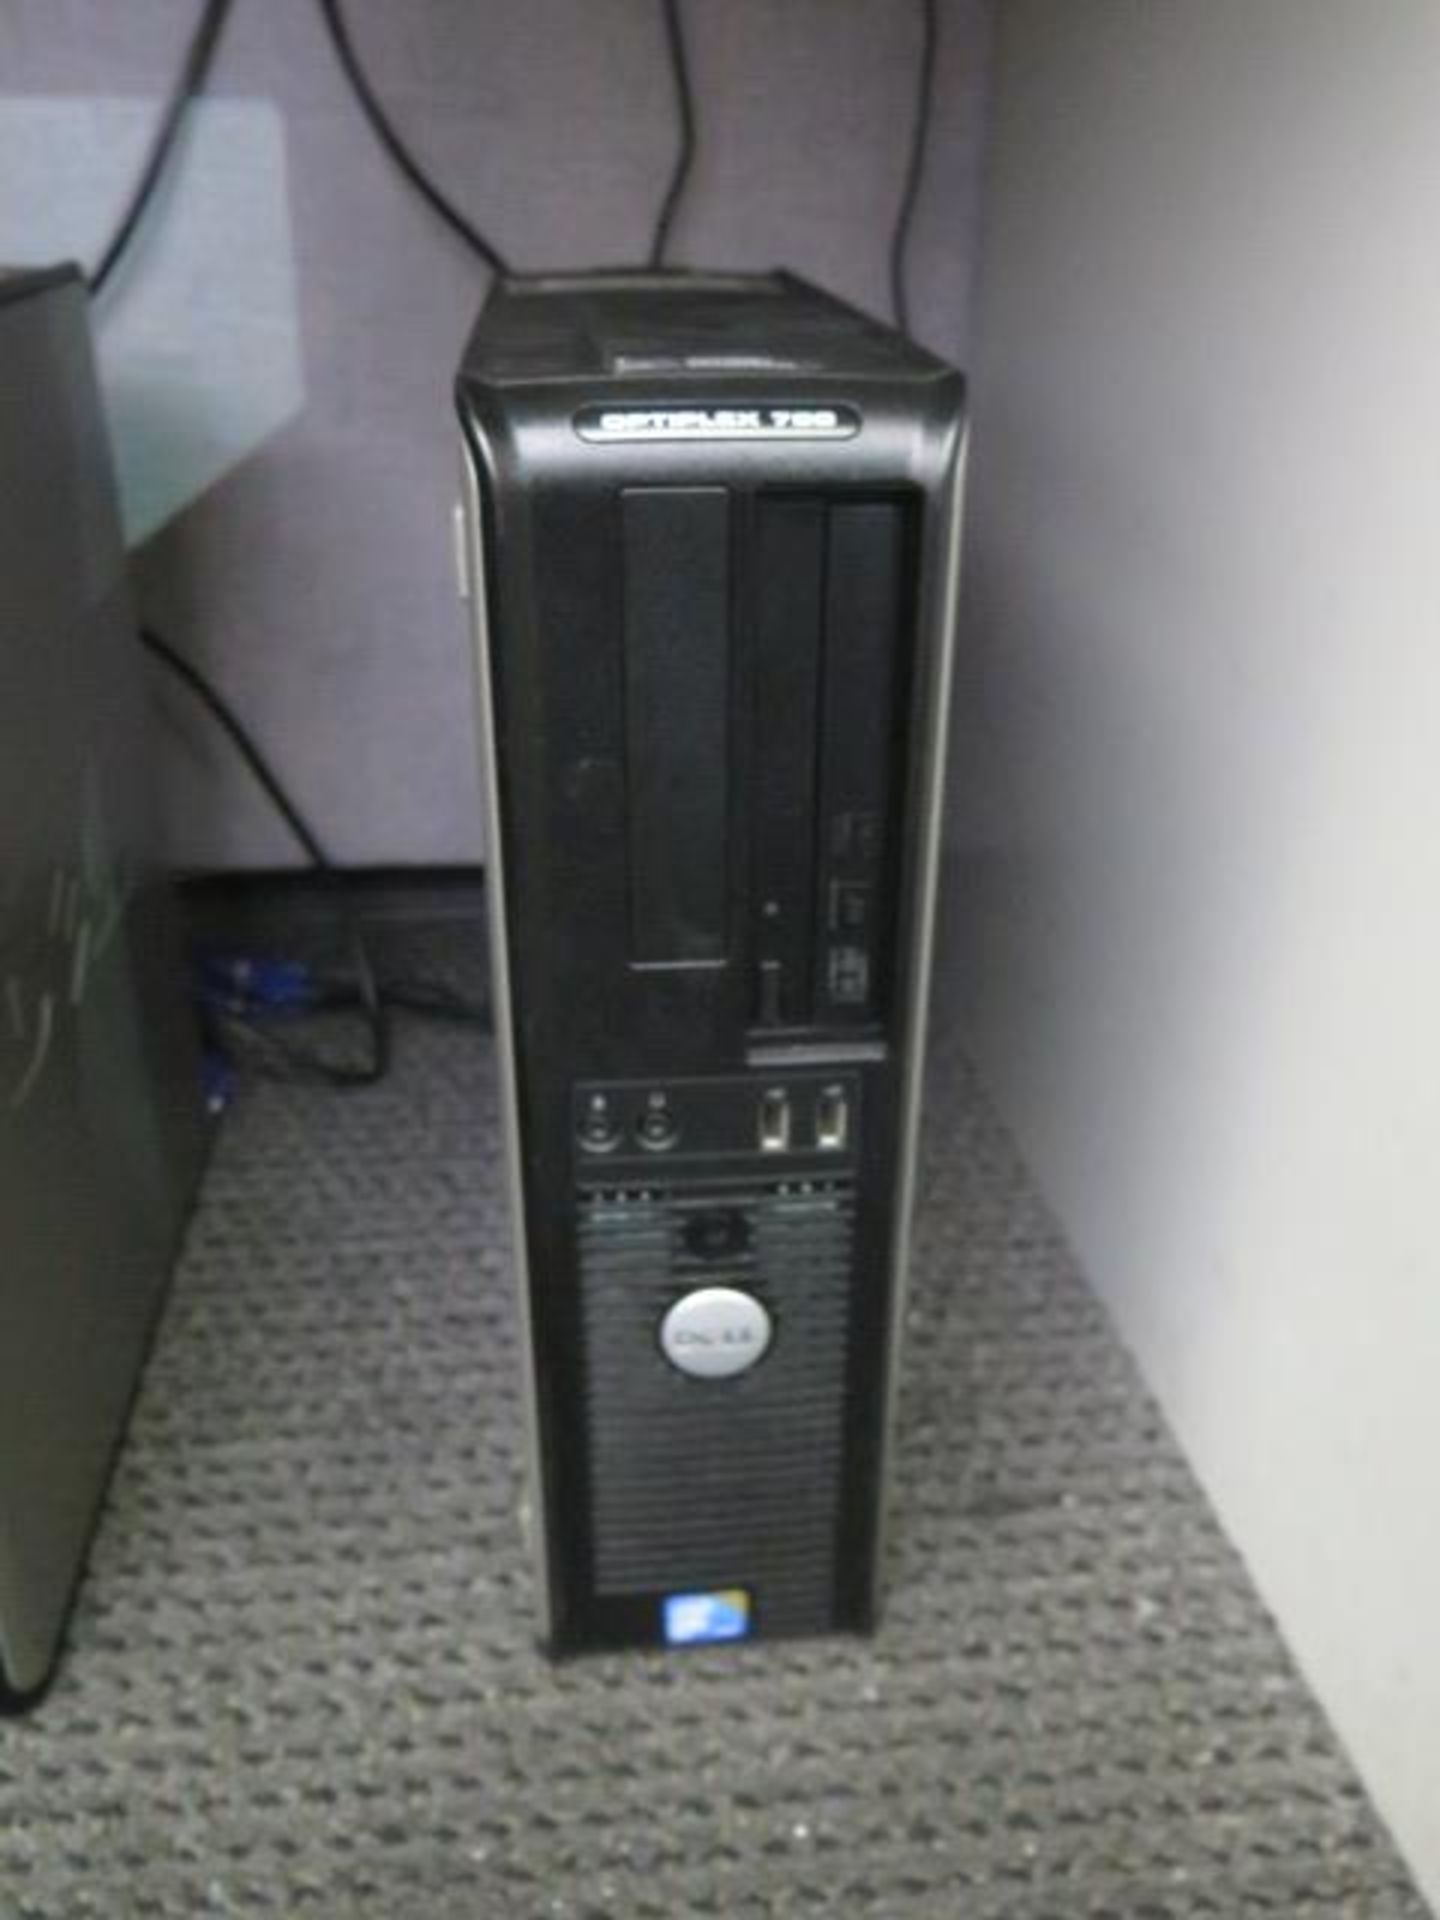 Dell Optiflex 780 Computers (2) w/ Desk (SOLD AS-IS - NO WARRANTY) - Image 5 of 7